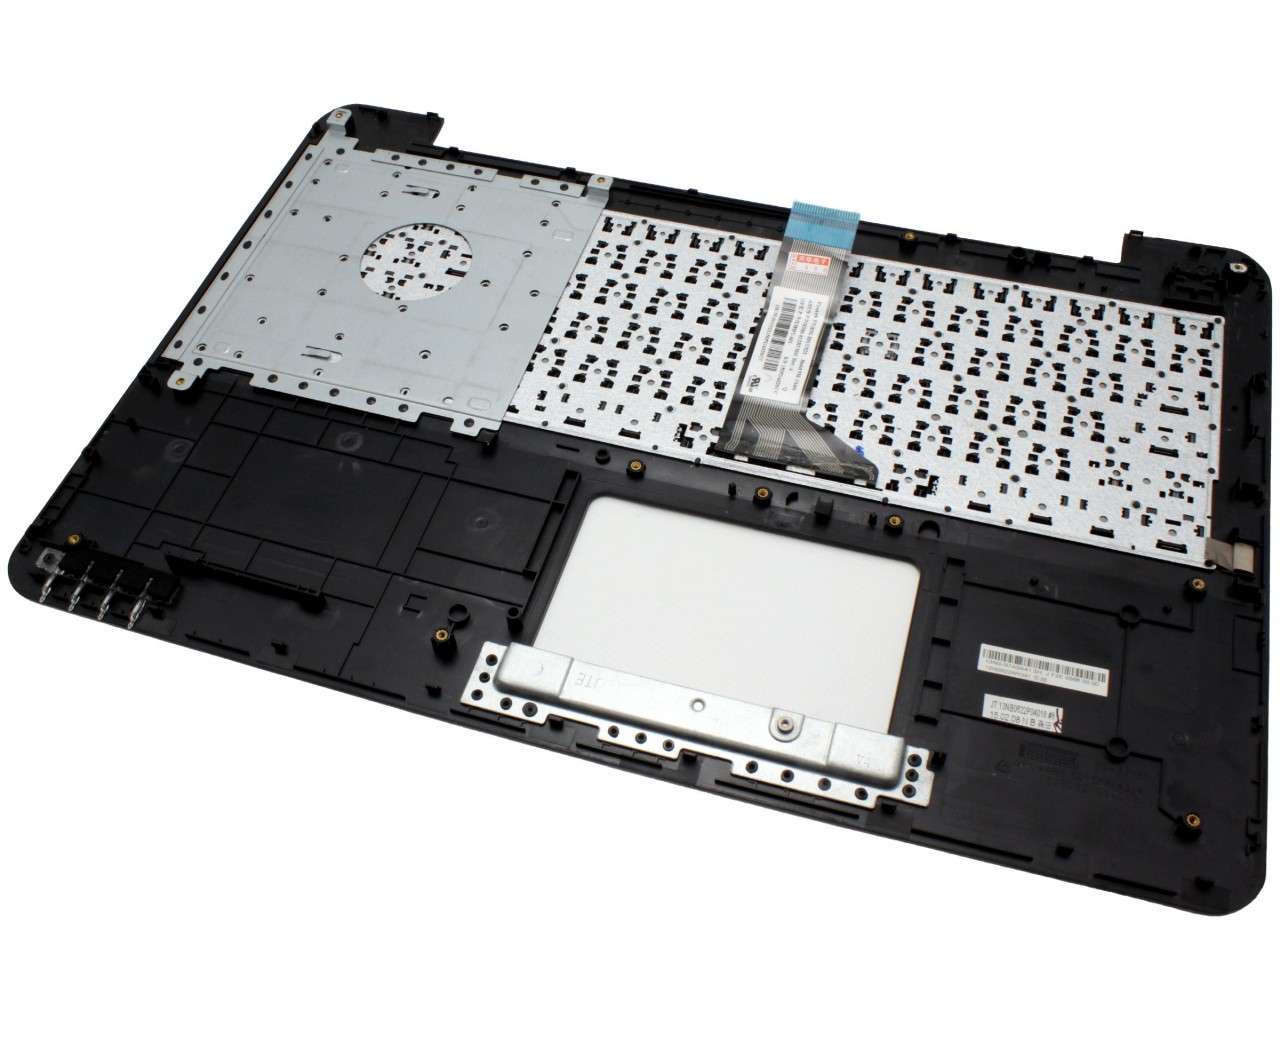 Tastatura Asus A555 Neagra cu Palmrest argintiu